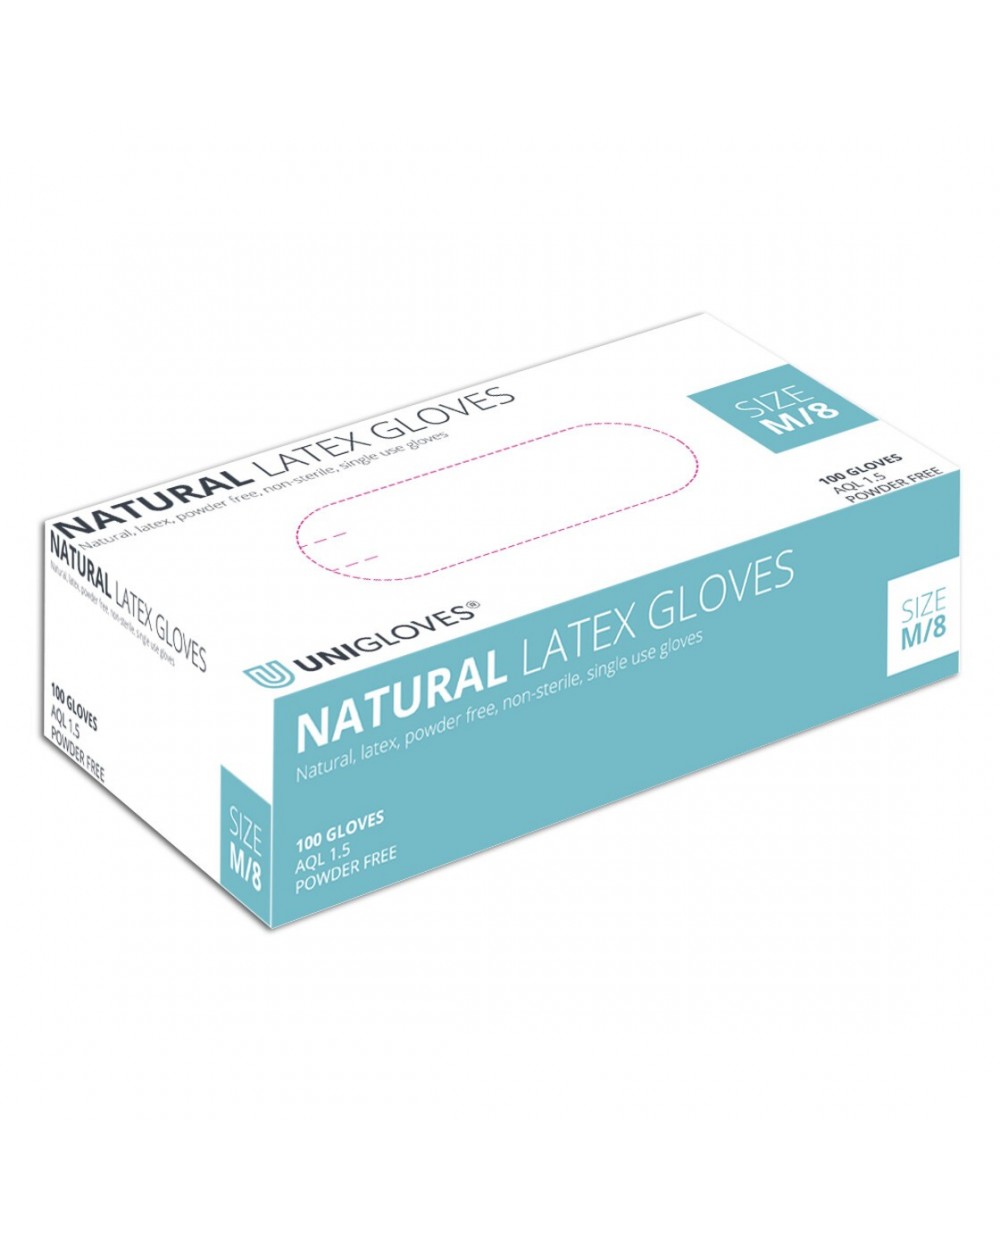 Unigloves Natural Latex Gloves Untersuchungshandschuhe - 1